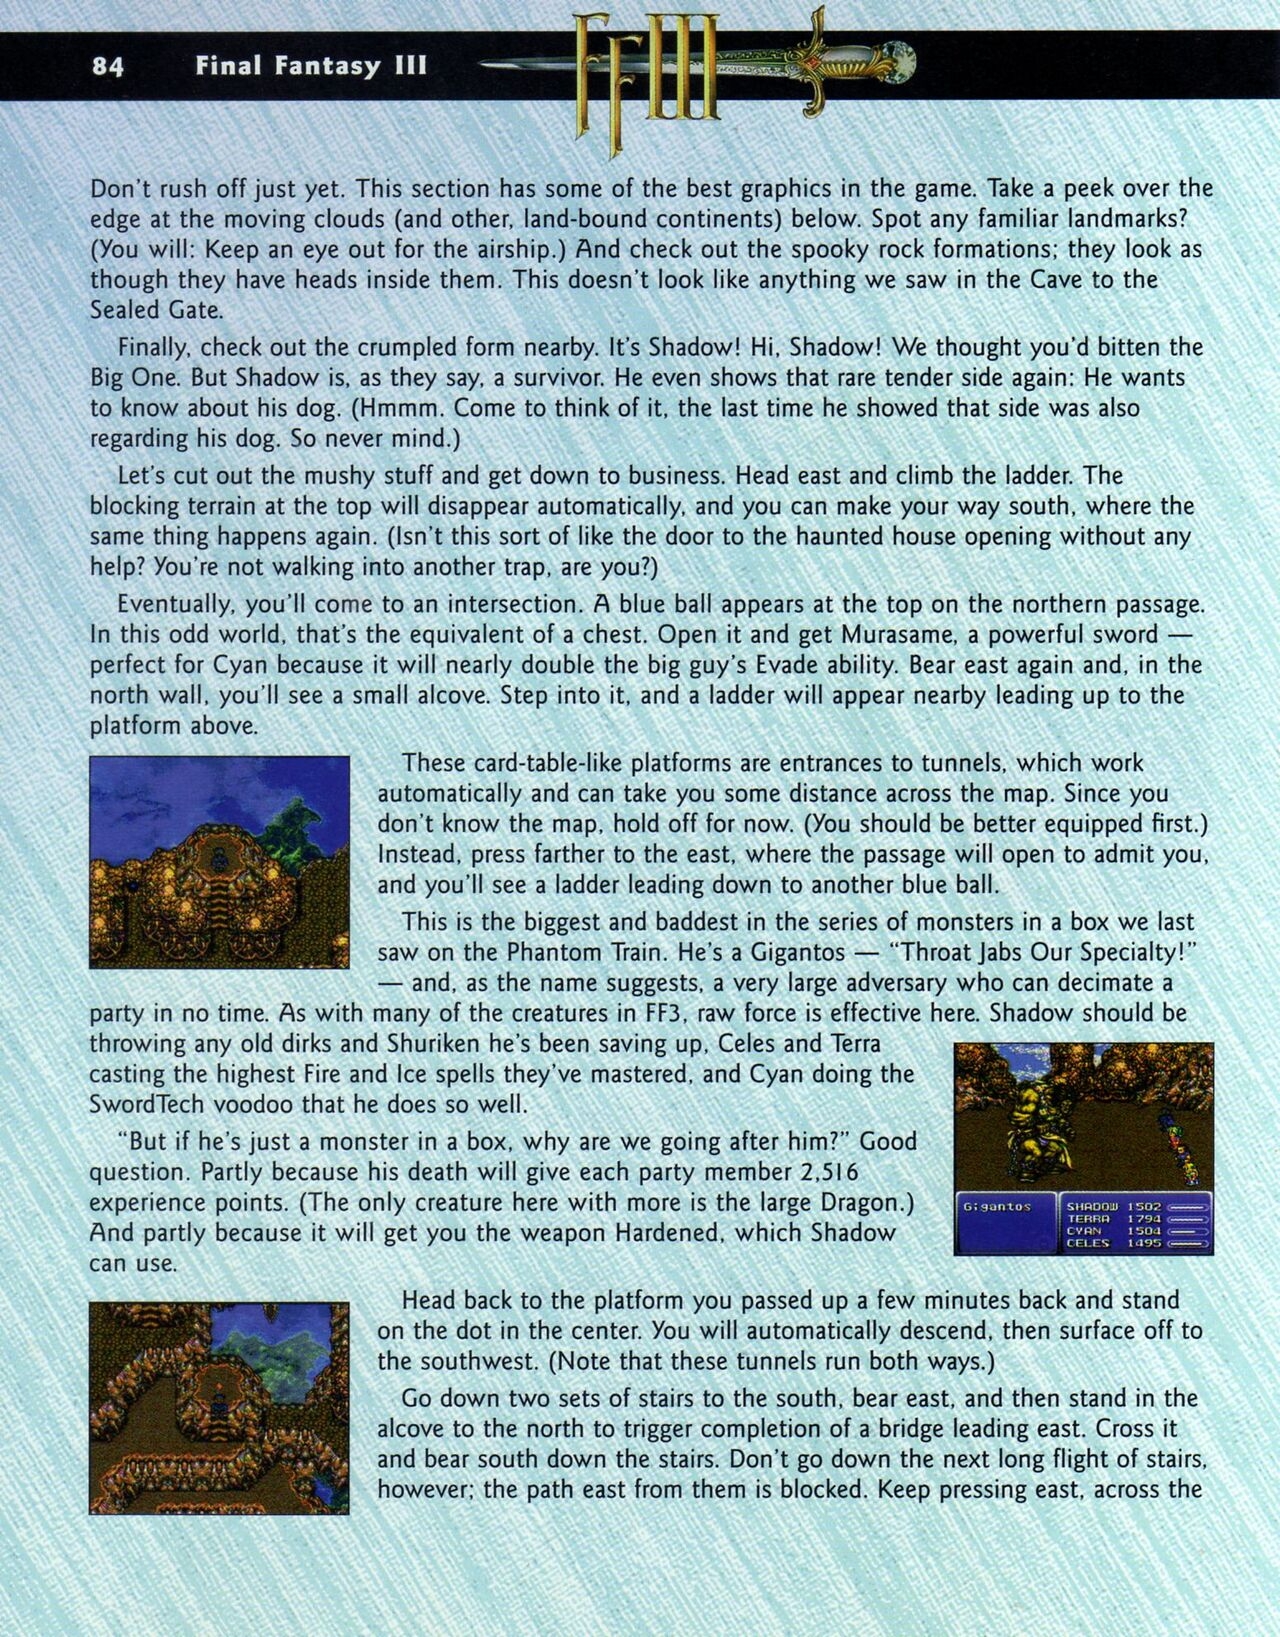 Final Fantasy III Players Guide 101